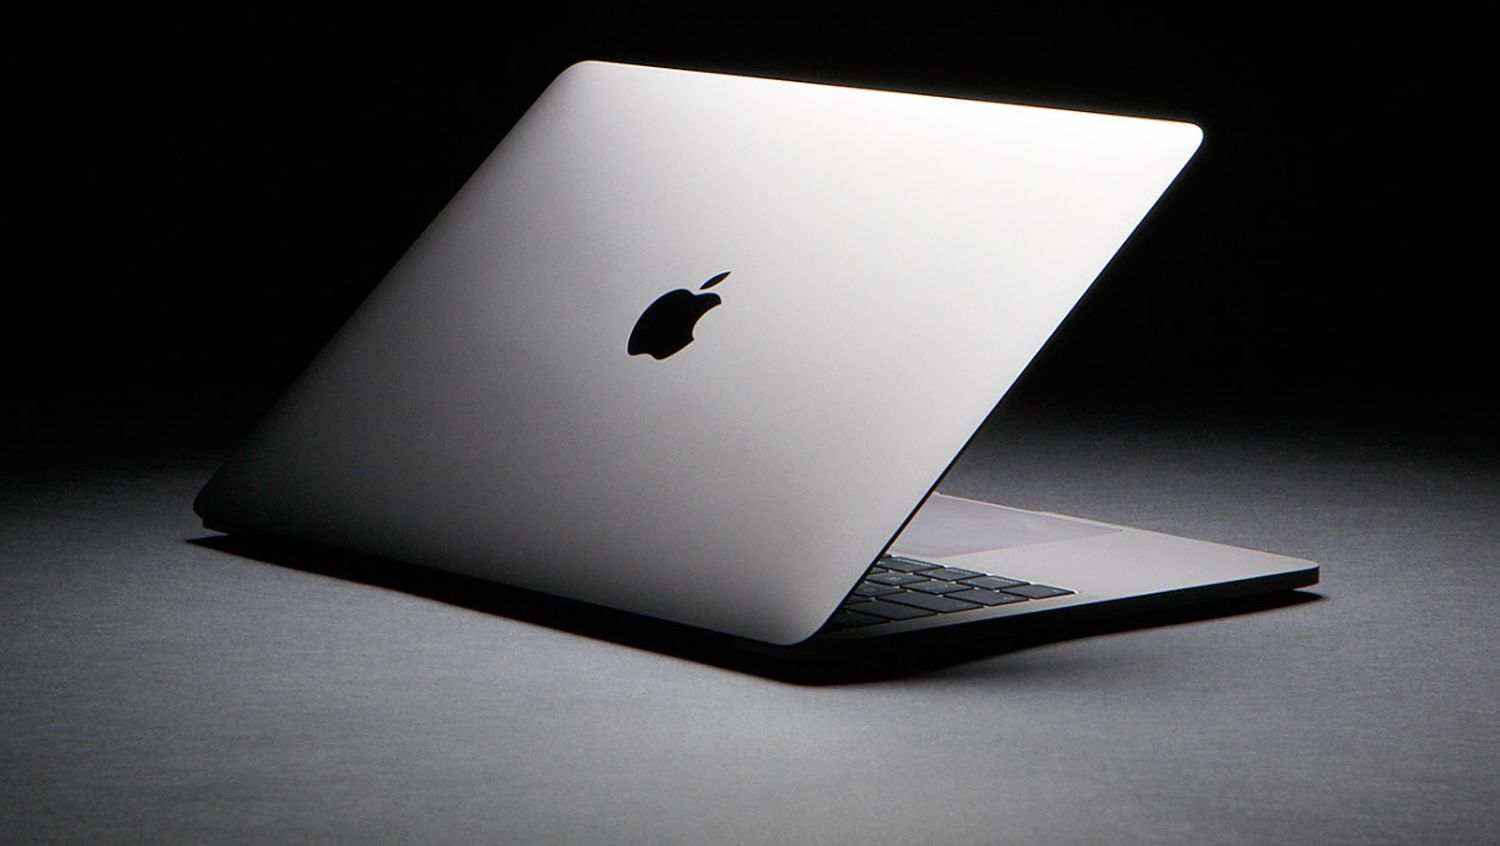 Bon plan Apple: Où trouver son Macbook Air ou Macbook Pro moins cher?